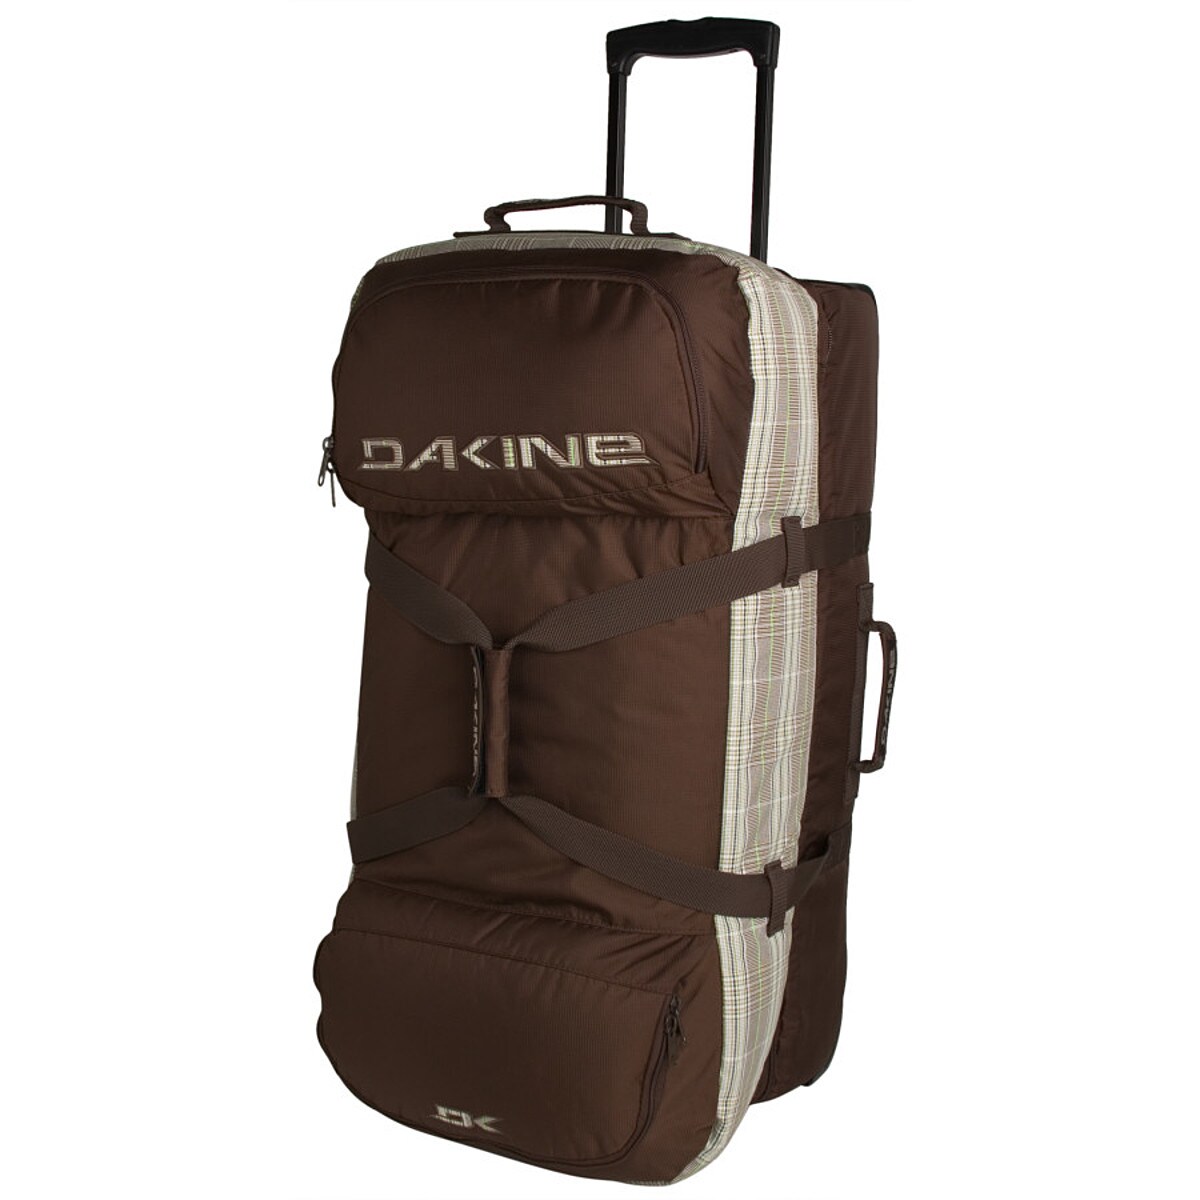 DAKINE Split Roller Bag - 90-120L - Travel